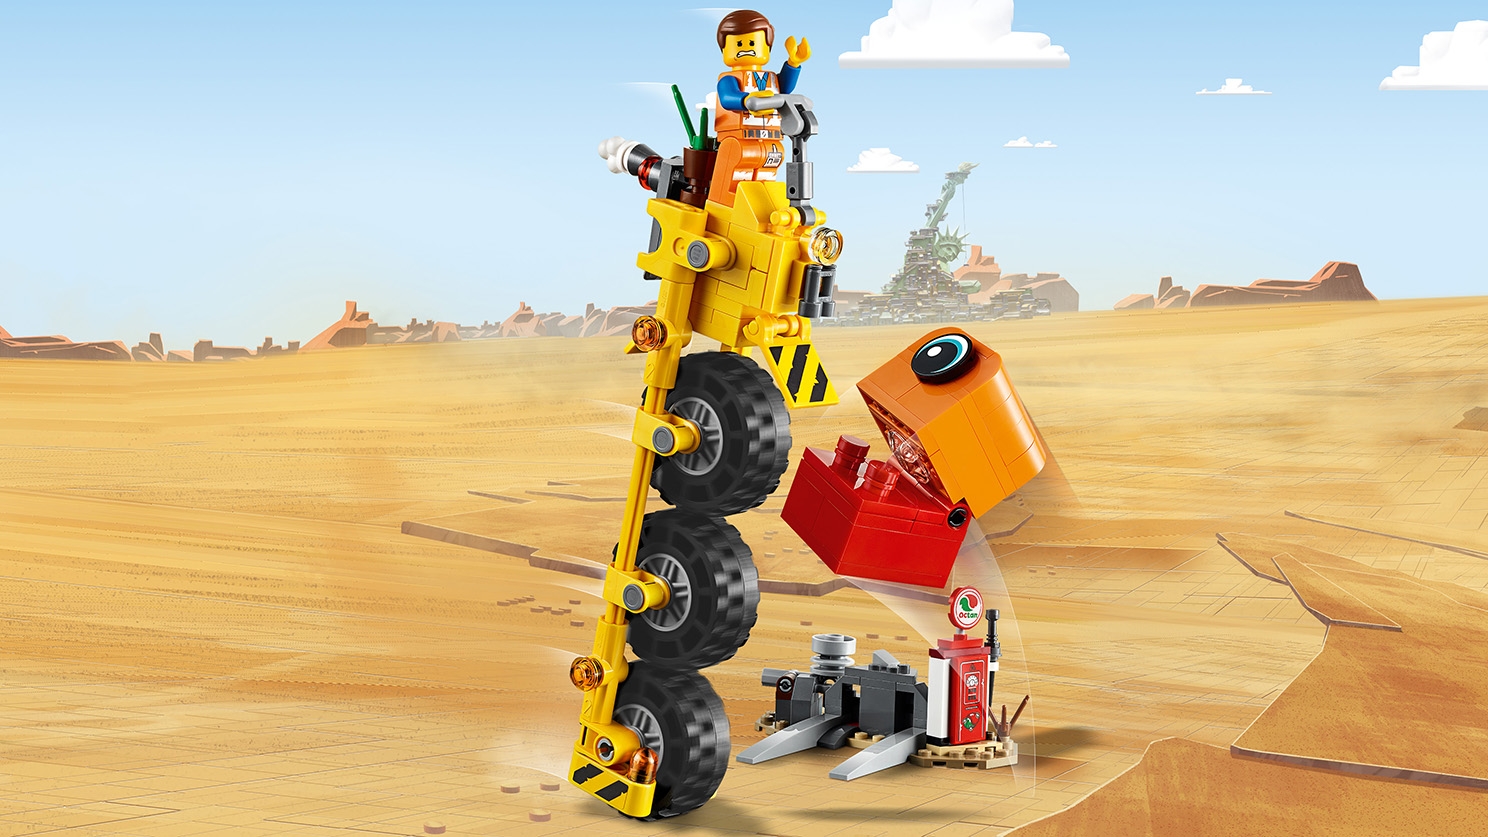 Lego The Lego Movie 2 Emmet's Thricycle! NEW 70823 